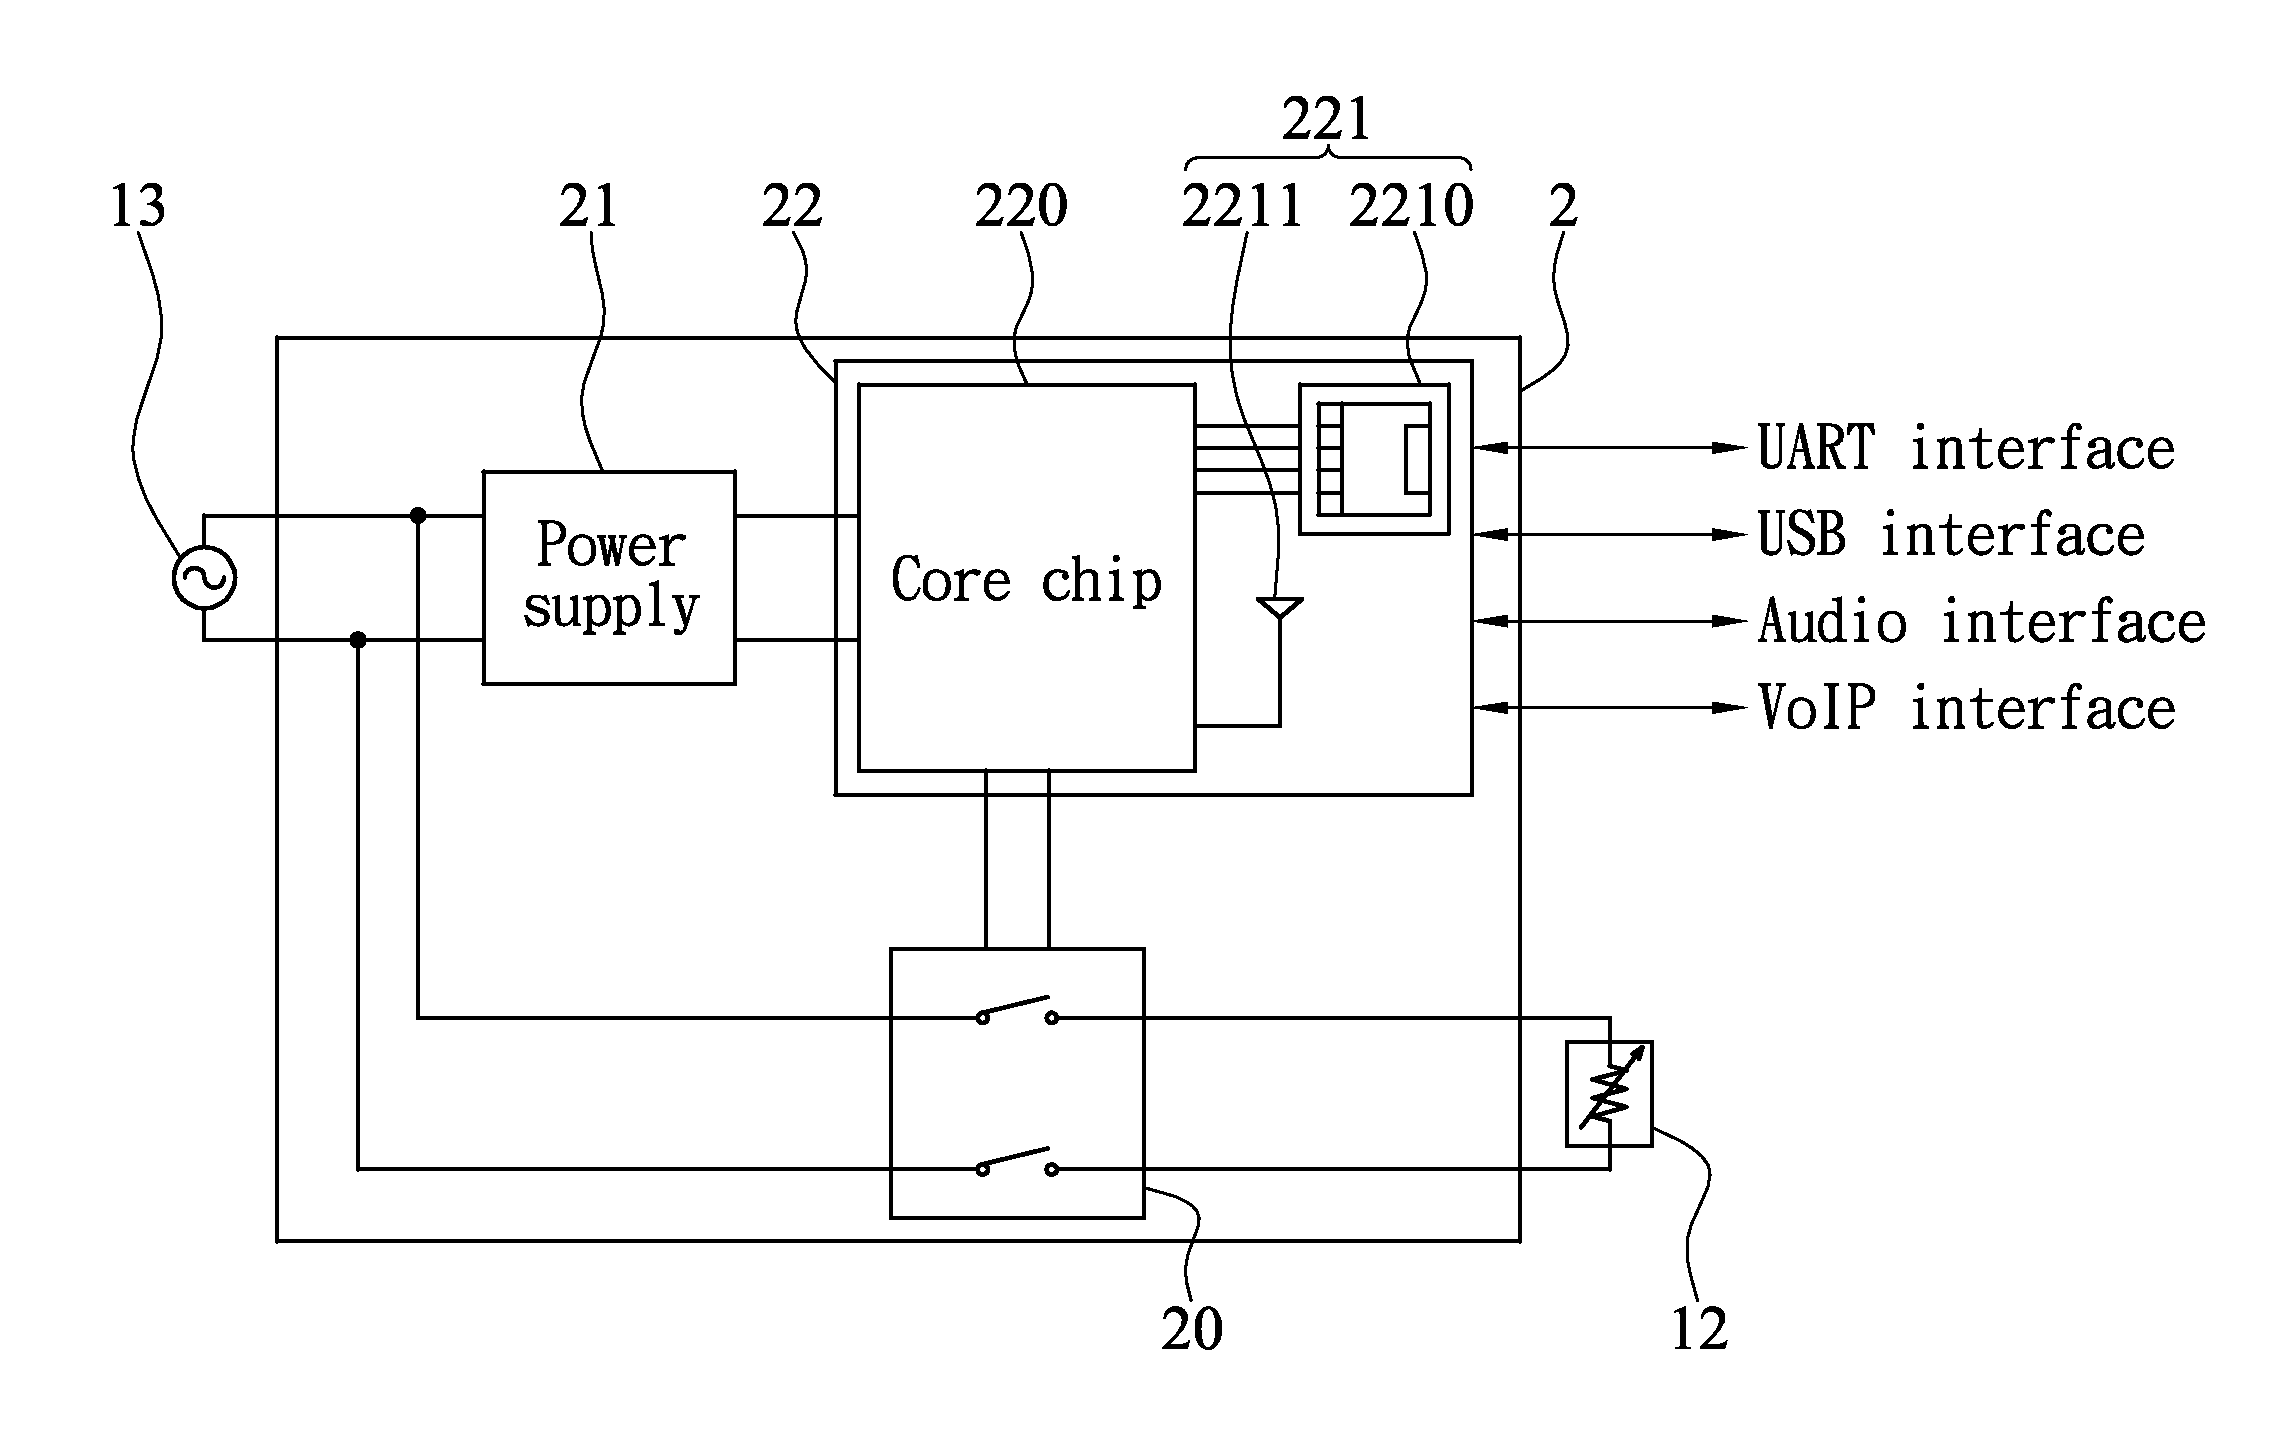 Network power control module